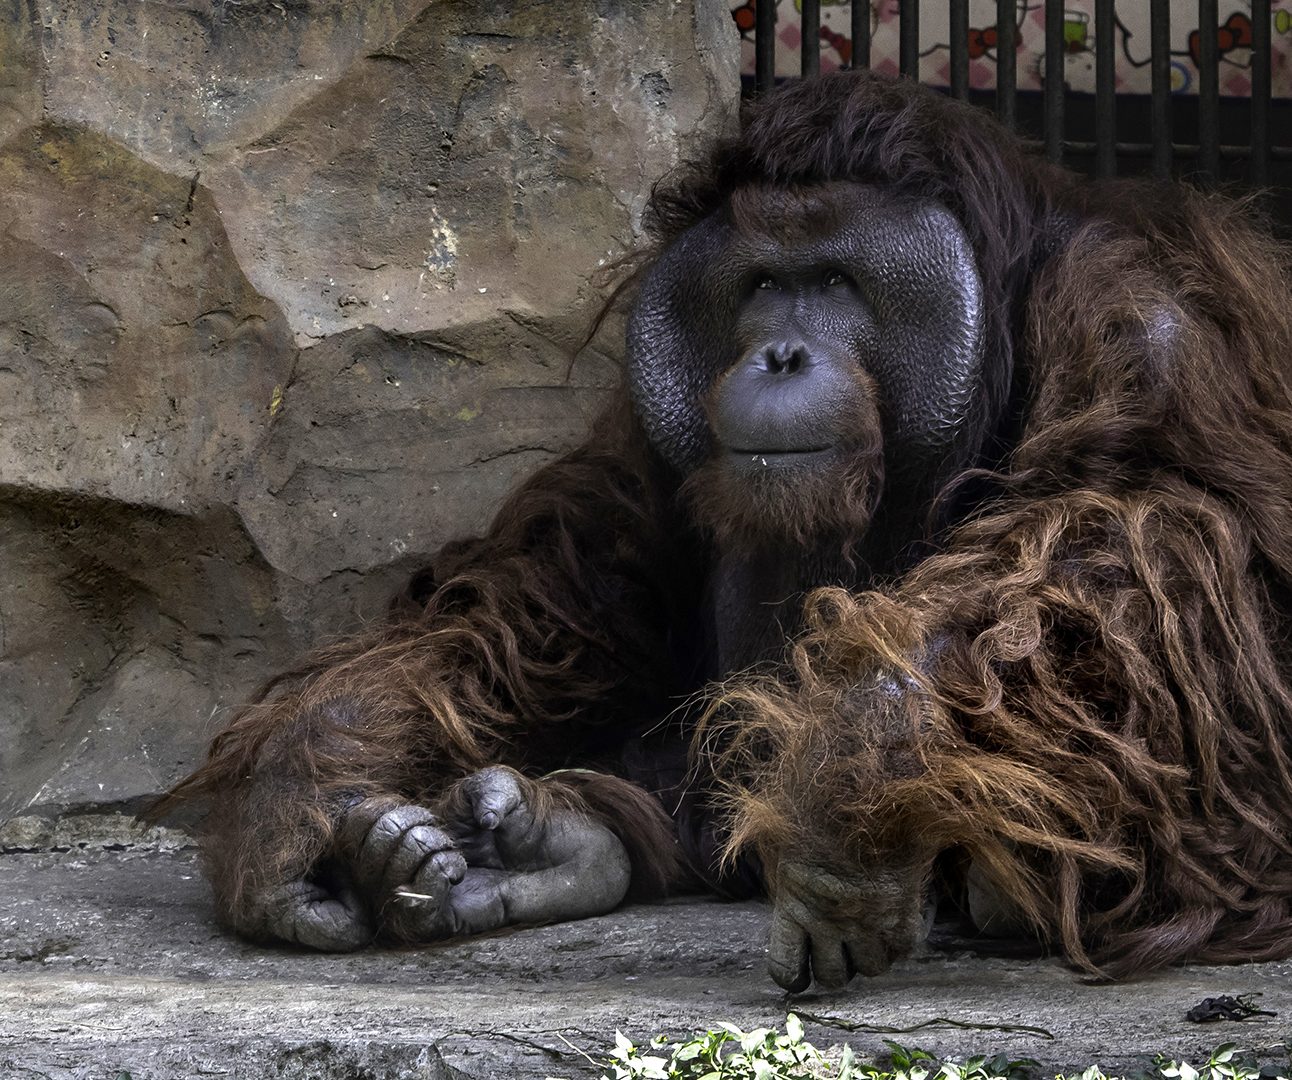 An orangutan sits on the floor of a zoo enclosure